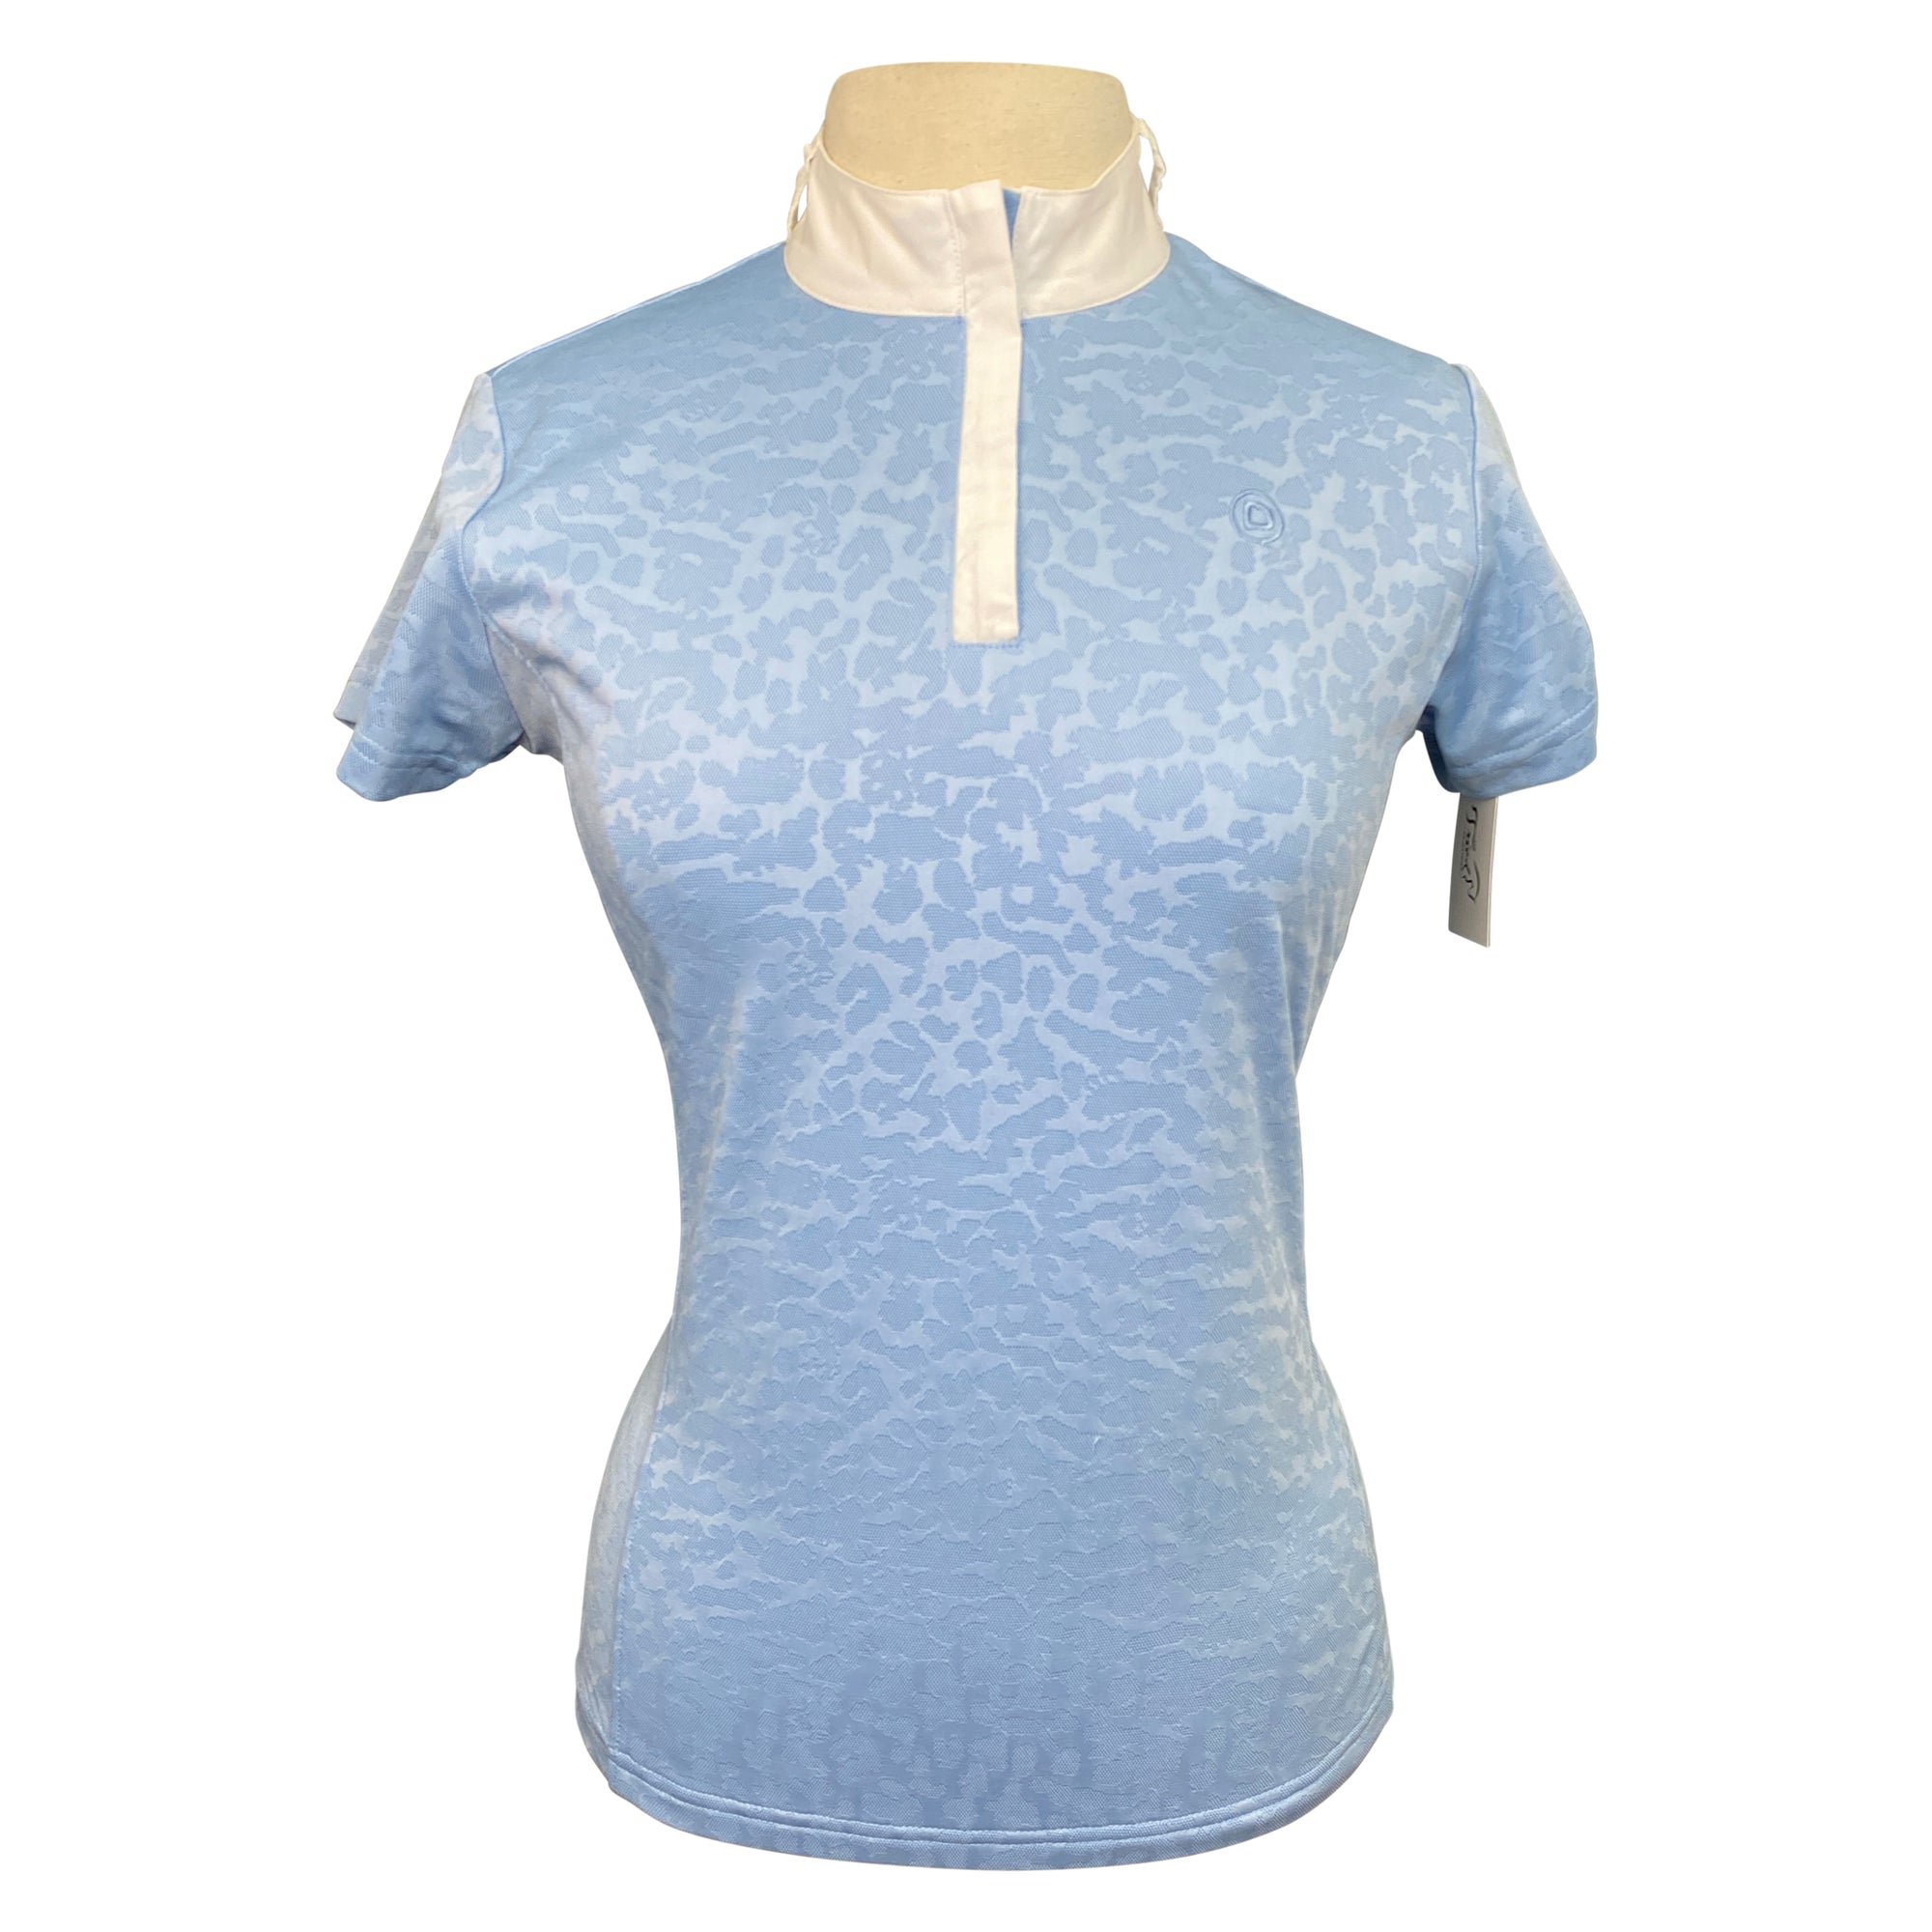 Dublin Lace Vented Short Sleeve Show Shirt in Powder Blue